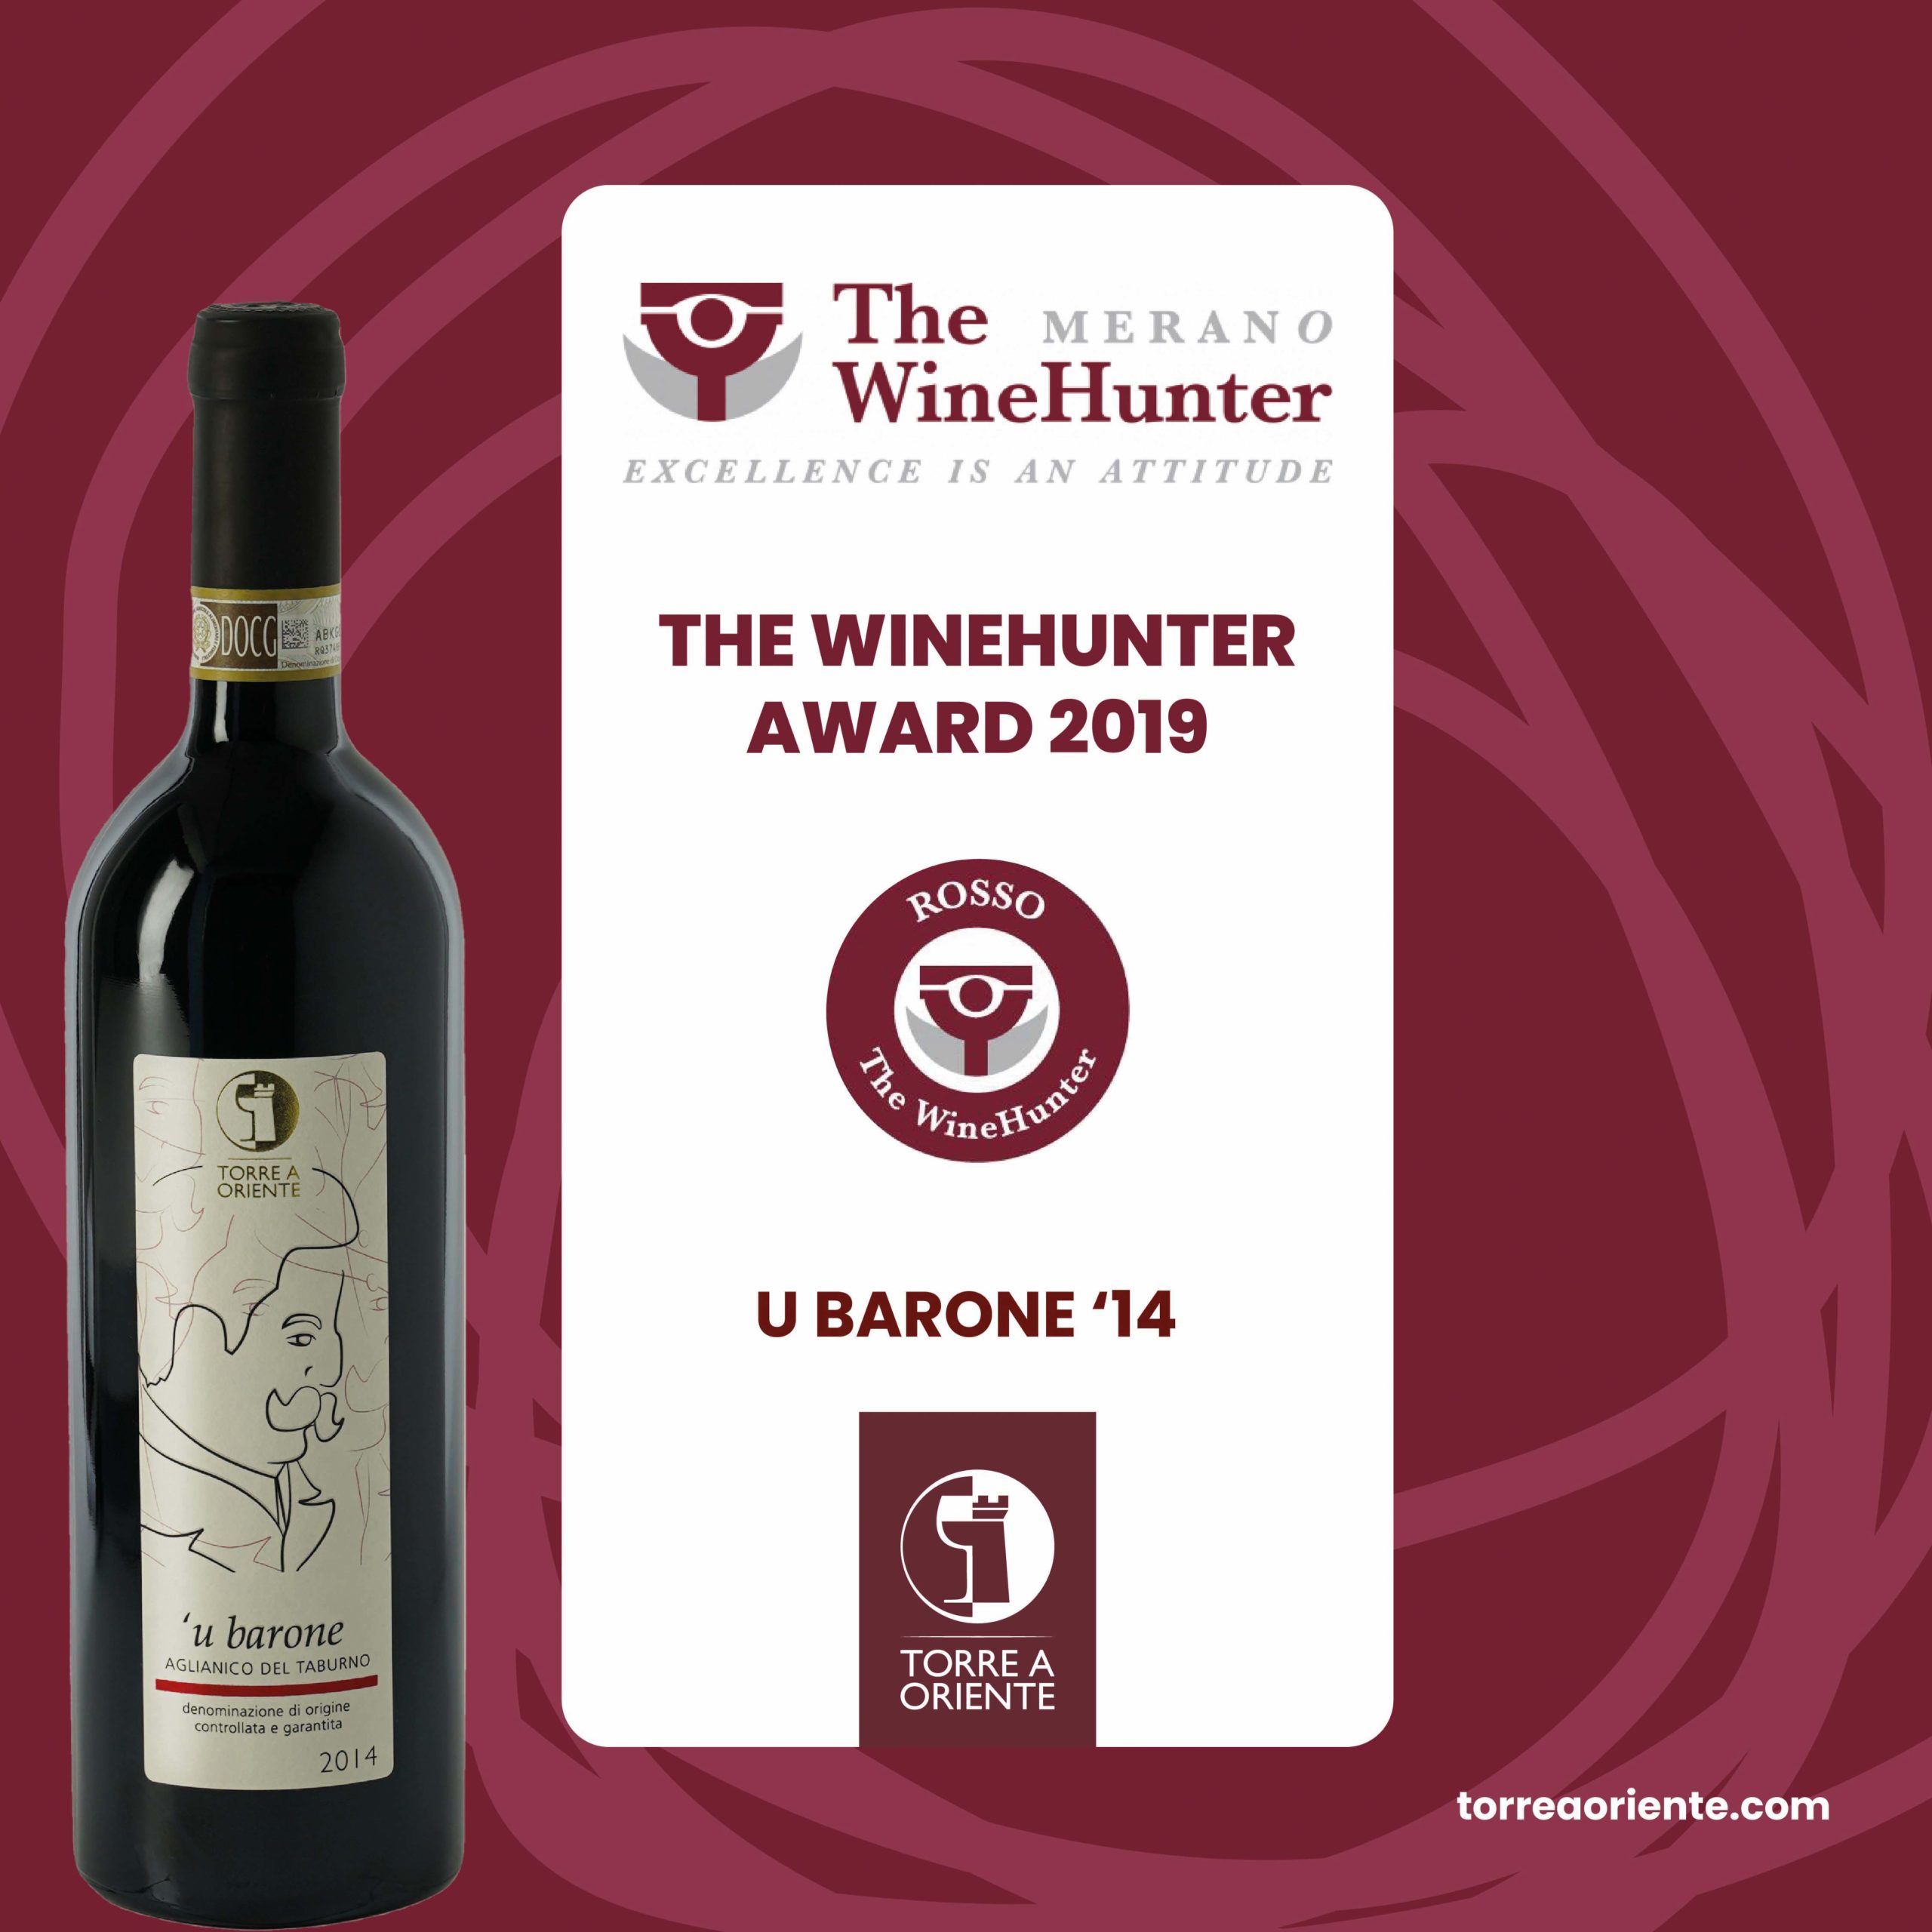 U barone – The winehunter 2019